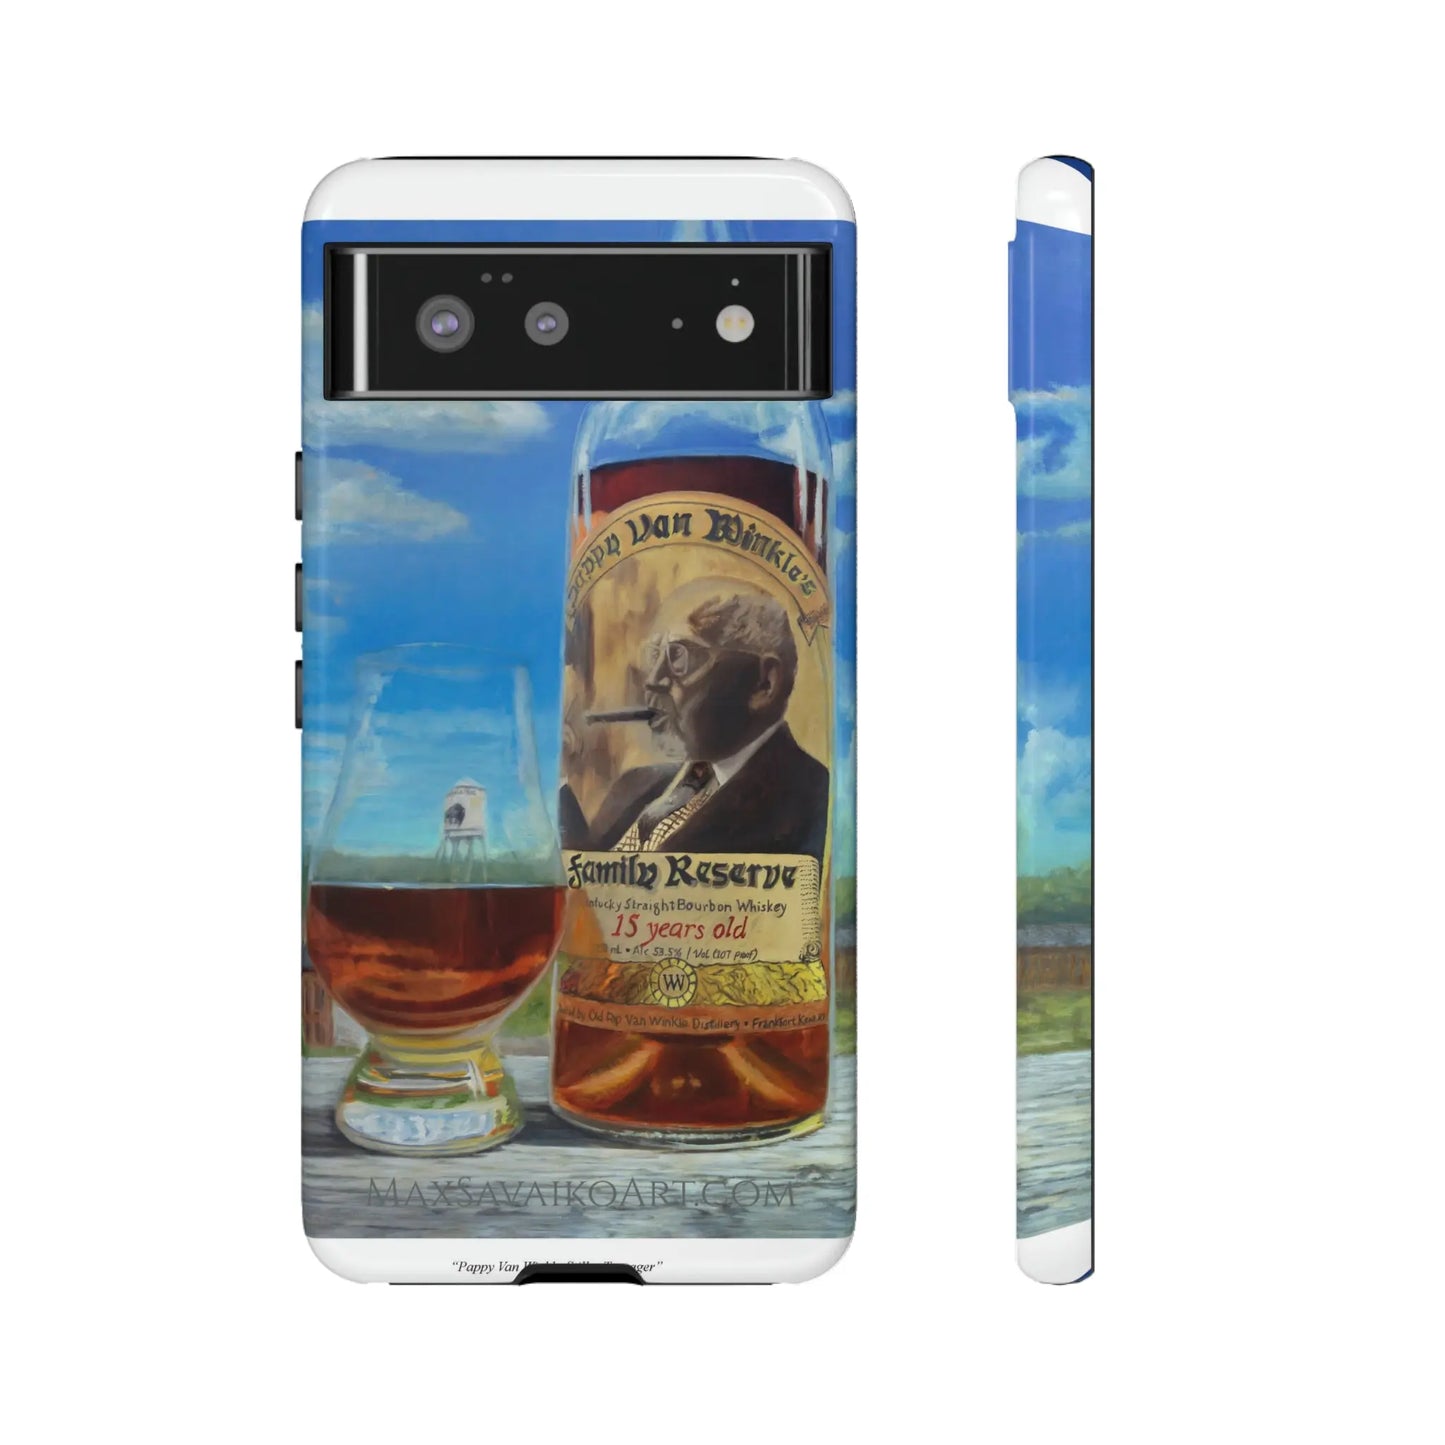 Savaiko Art - Pappy Van Winkle phone case - Max Savaiko Art